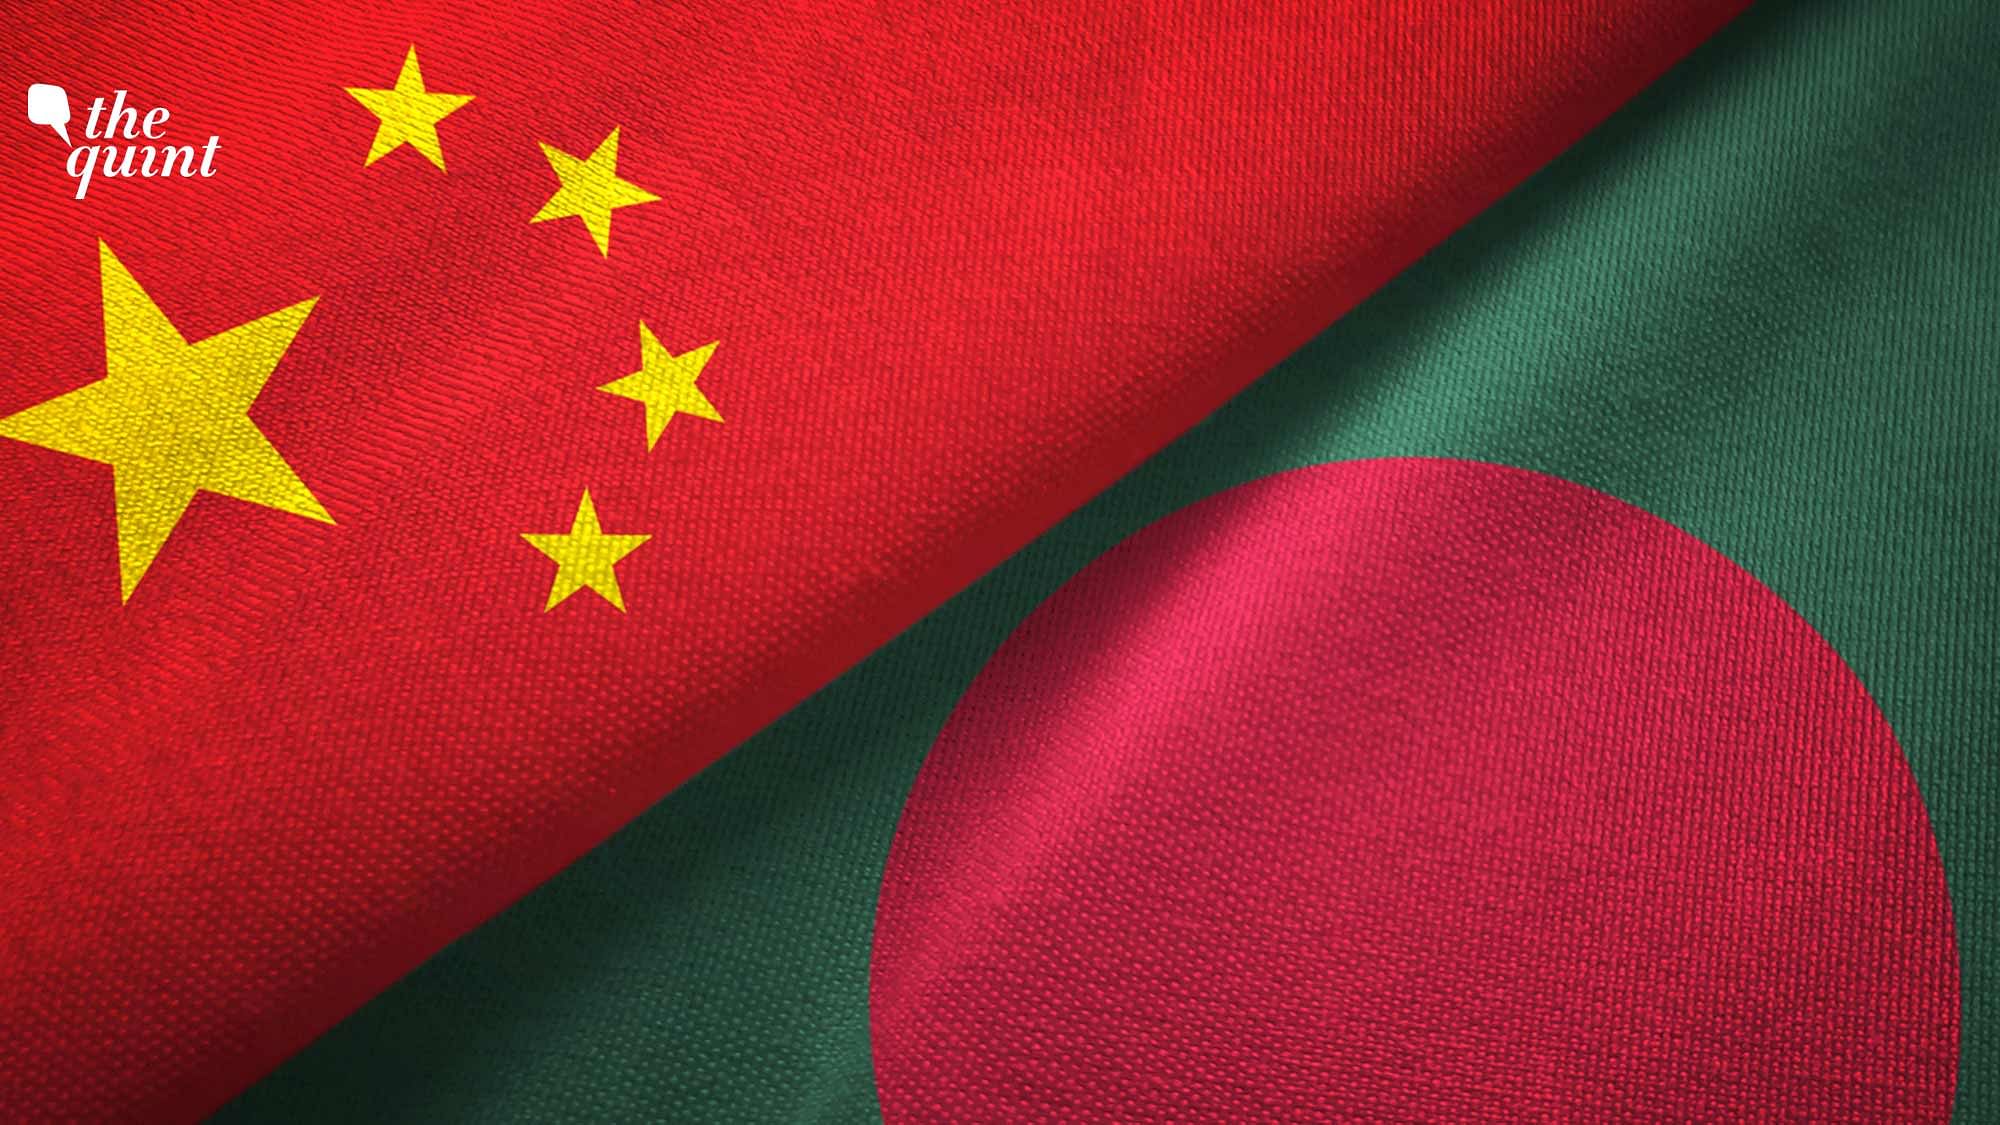 Image of China and Bangladesh flags used for representational purposes.